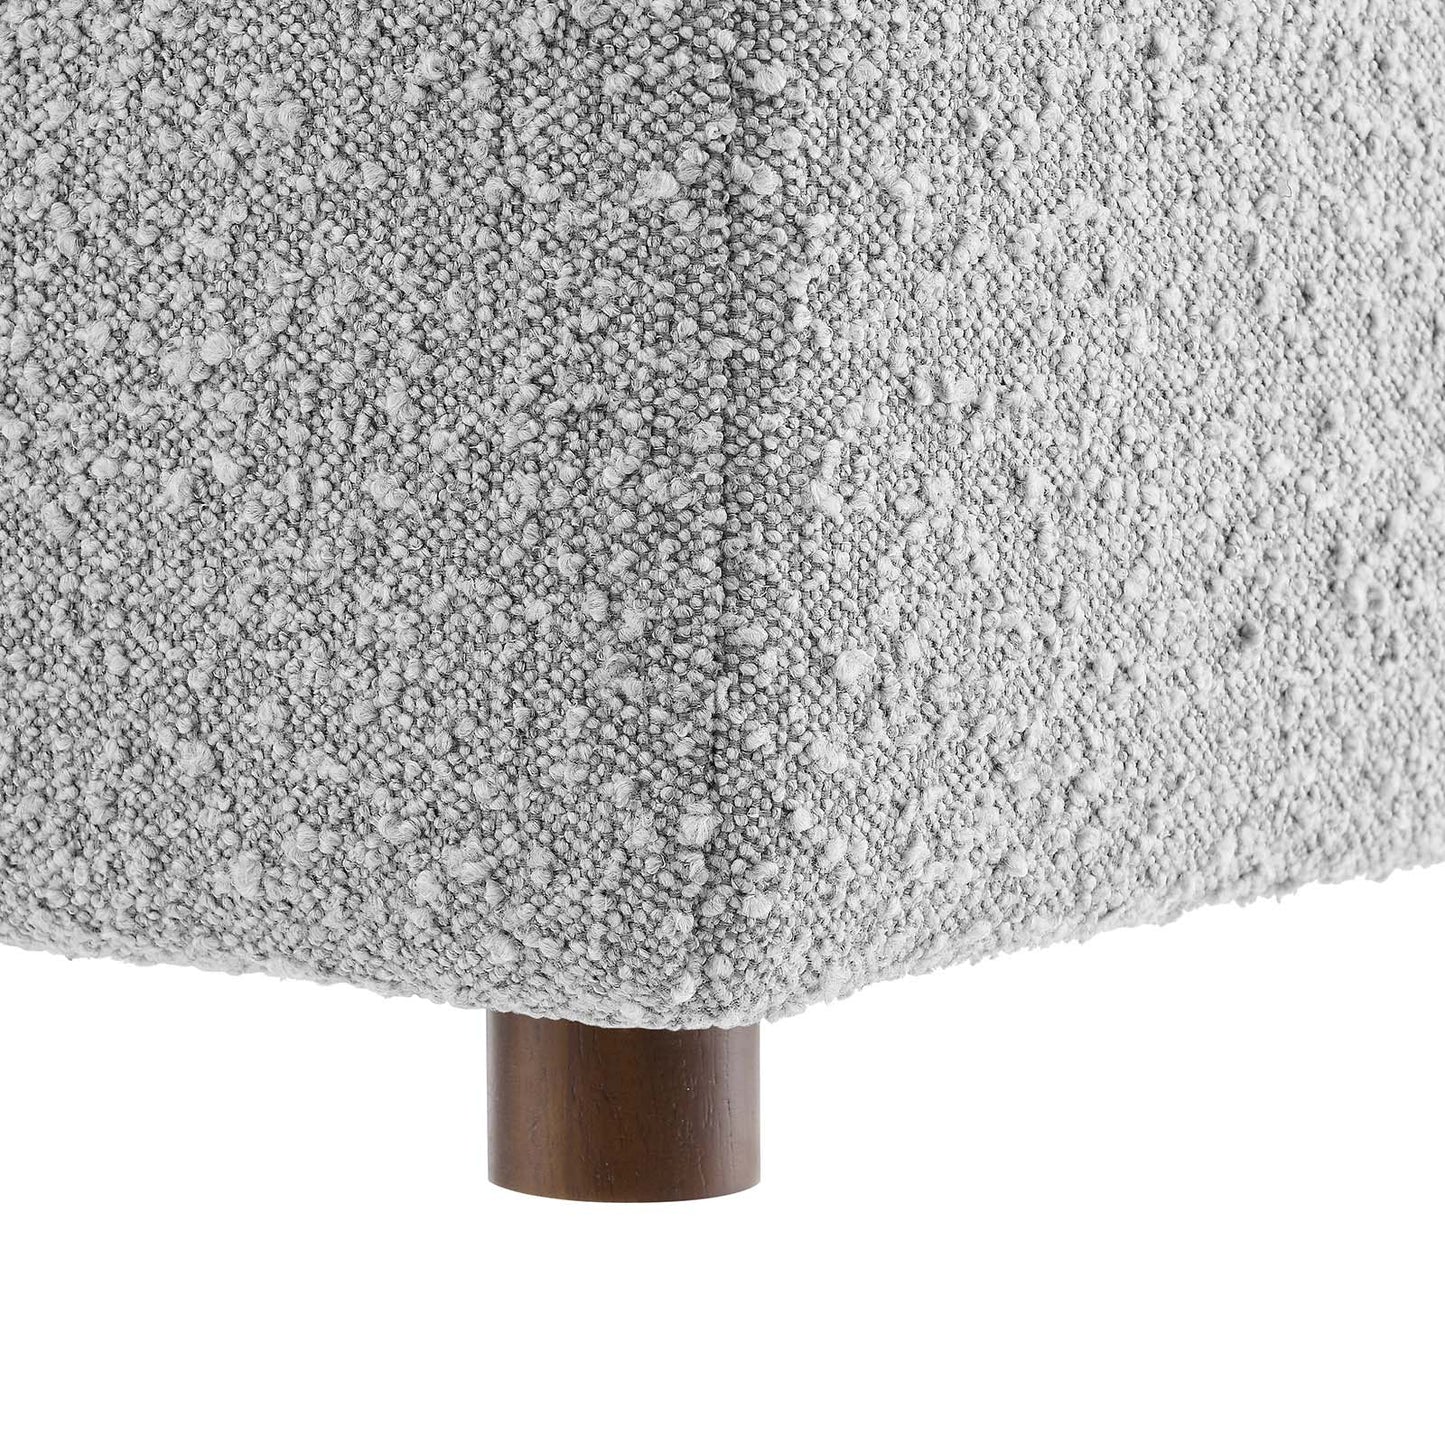 Commix Down Filled Overstuffed Boucle Fabric Armless Chair Light Gray EEI-6257-LGR